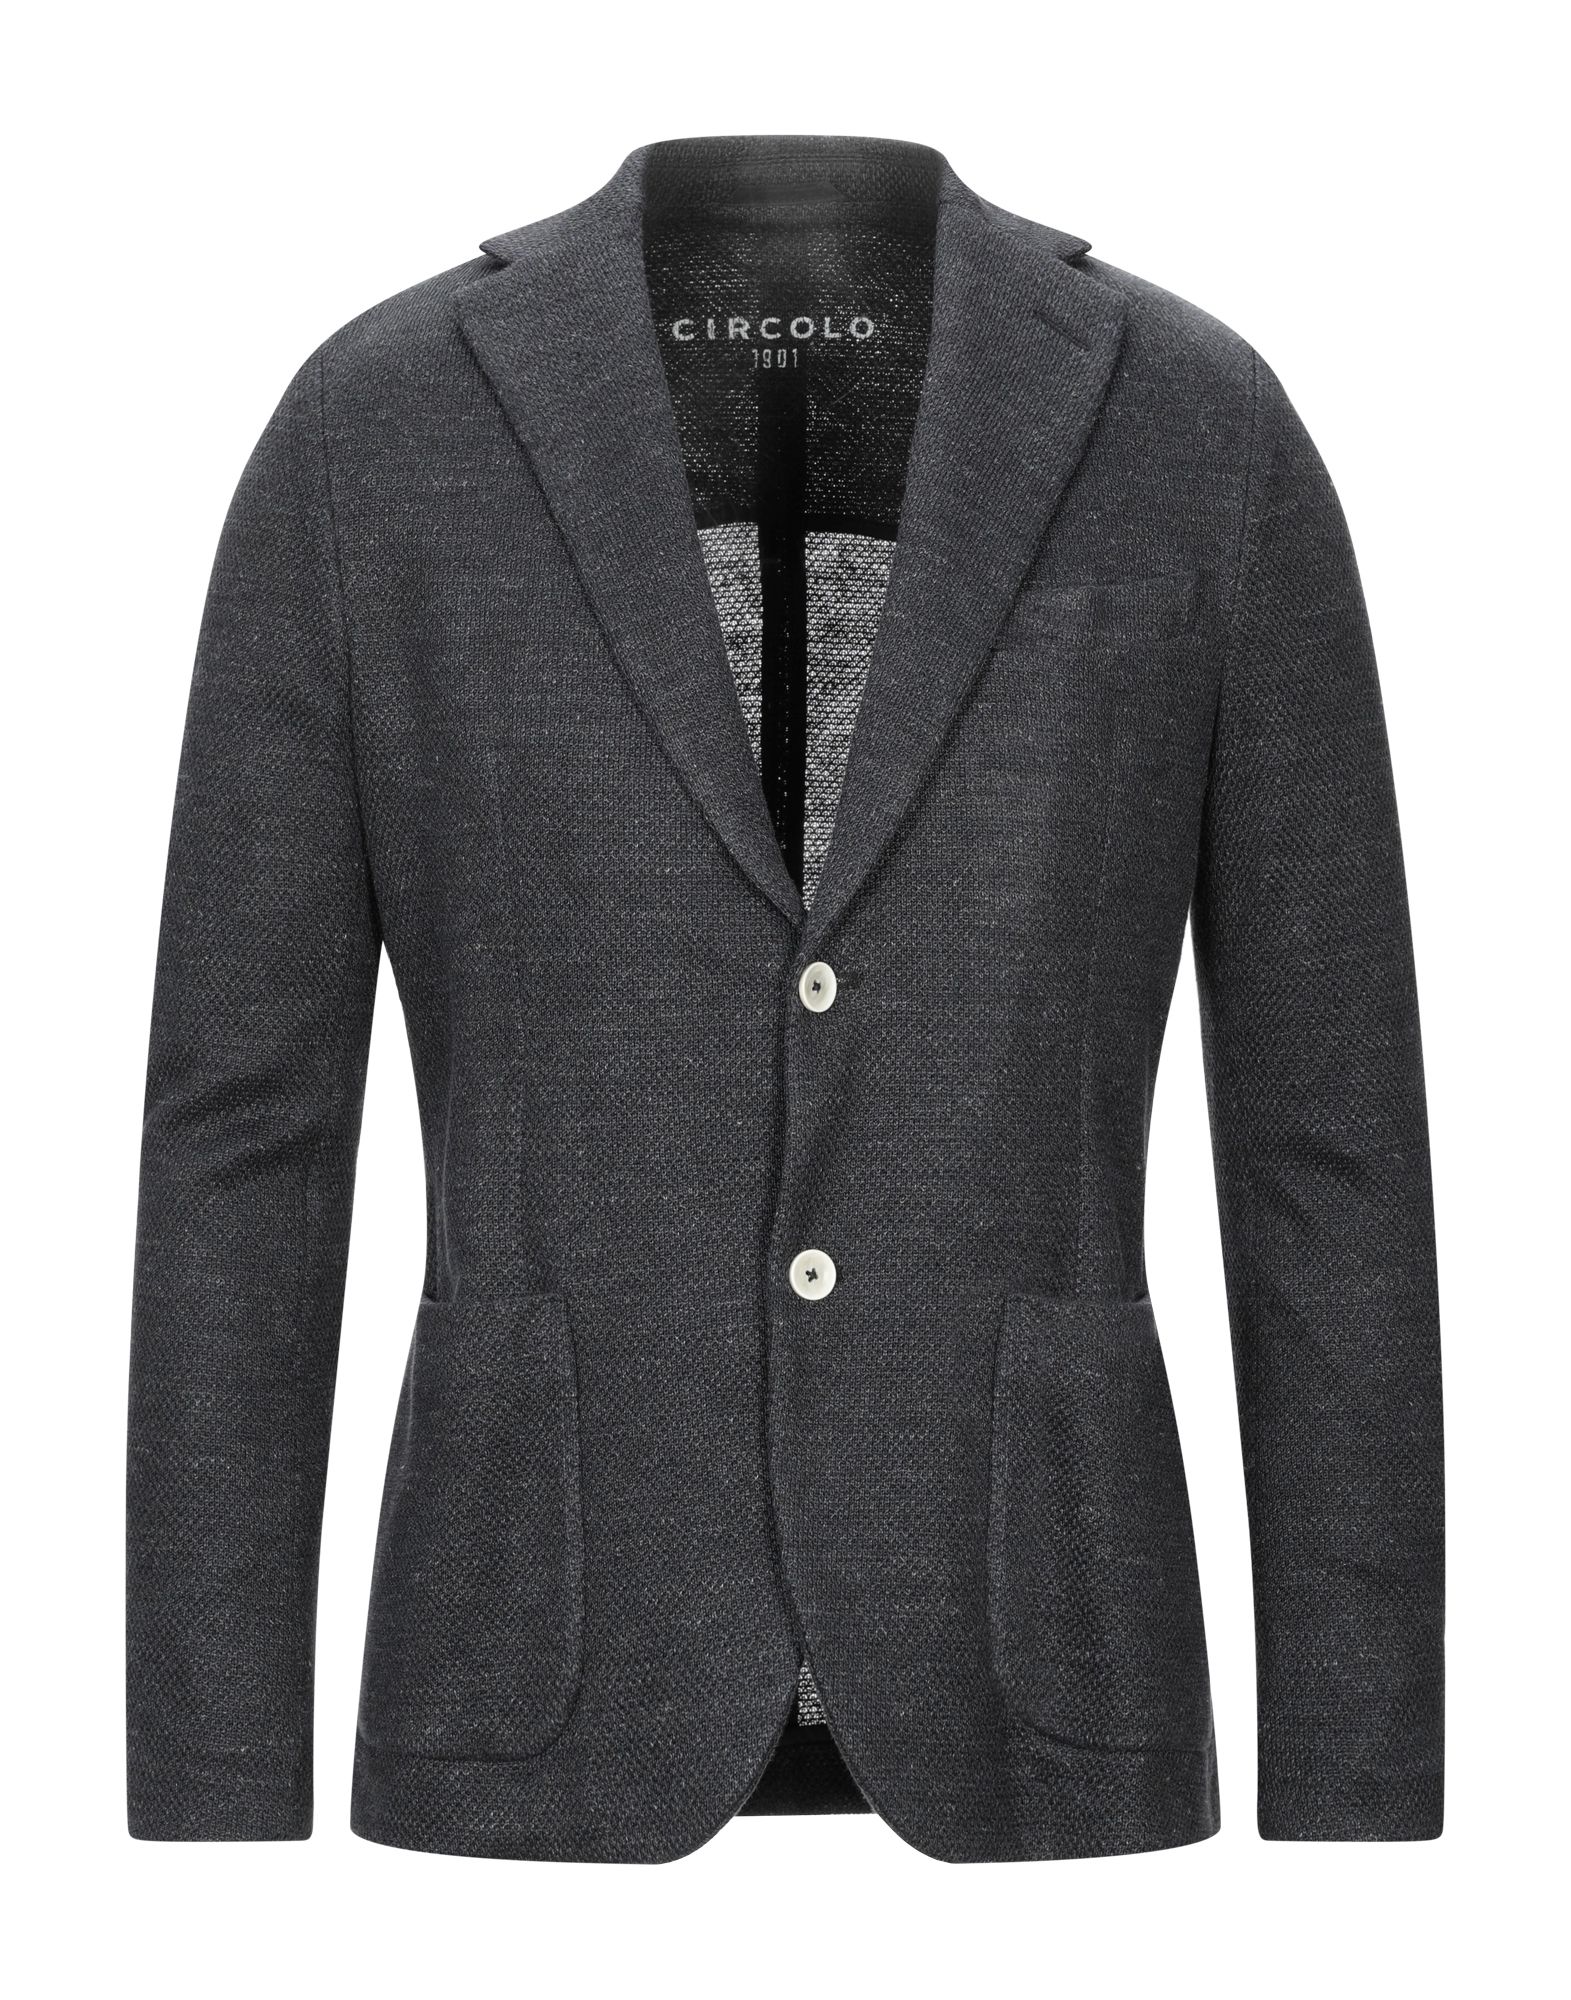 CIRCOLO 1901 Suit jackets | Smart Closet